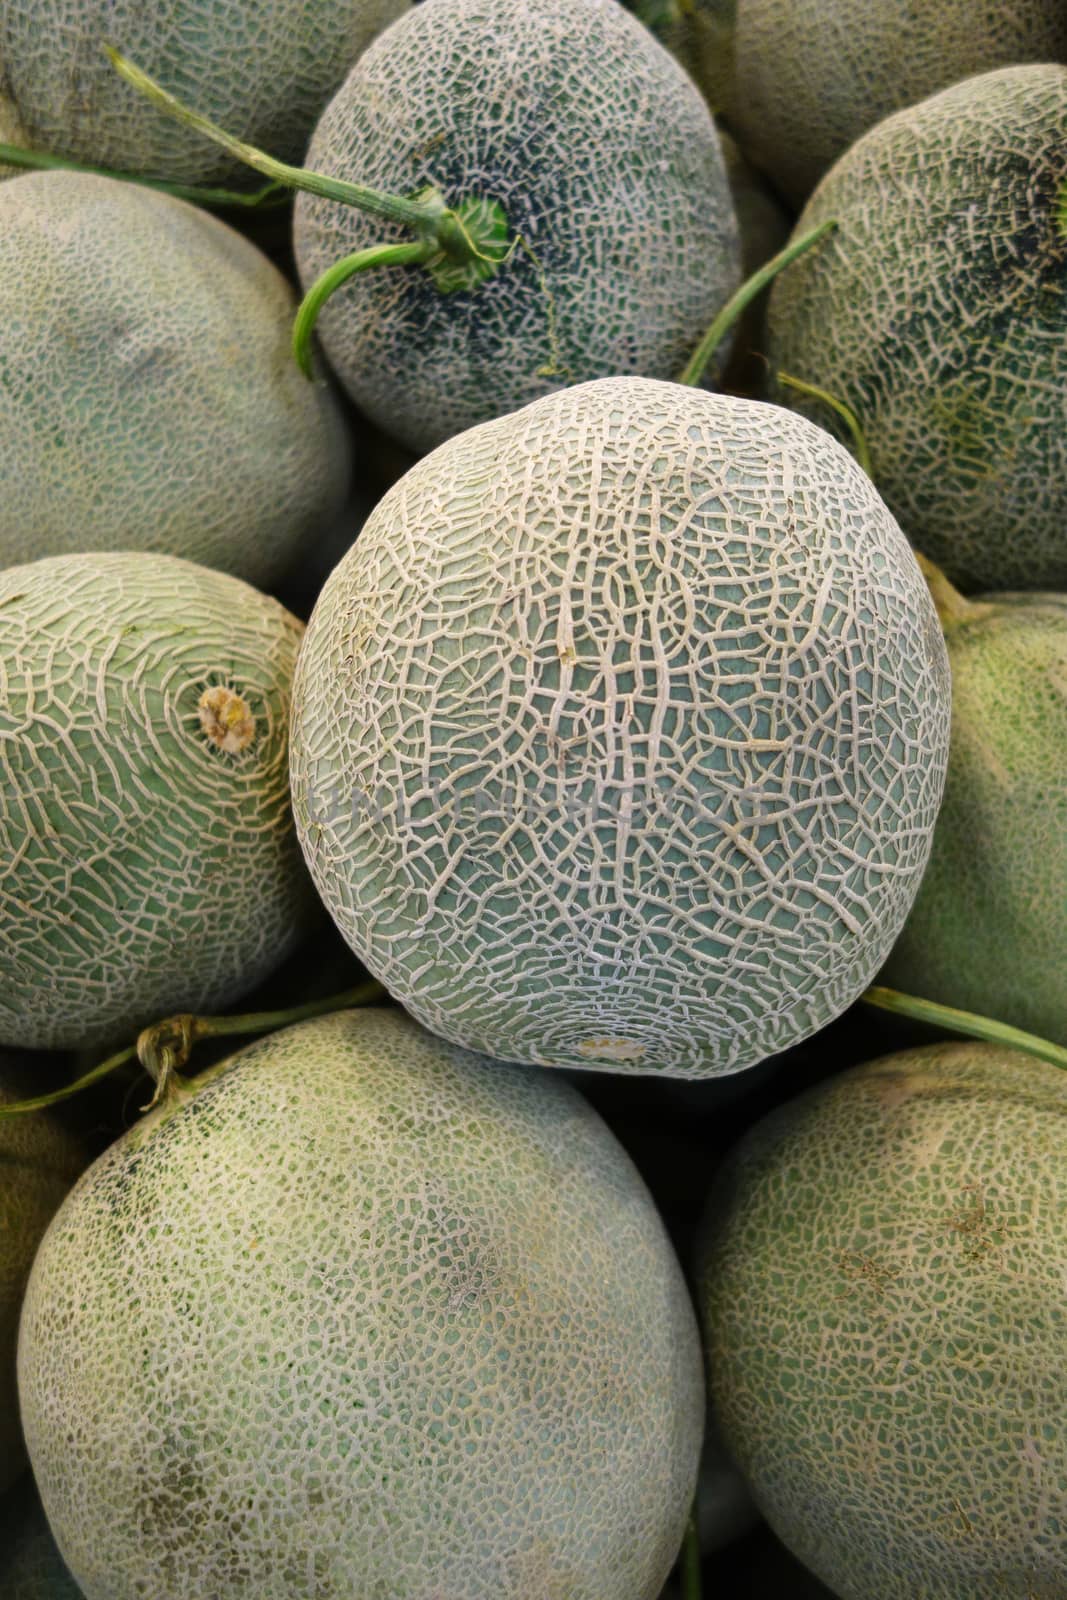 Rock melon sale in market by tang90246